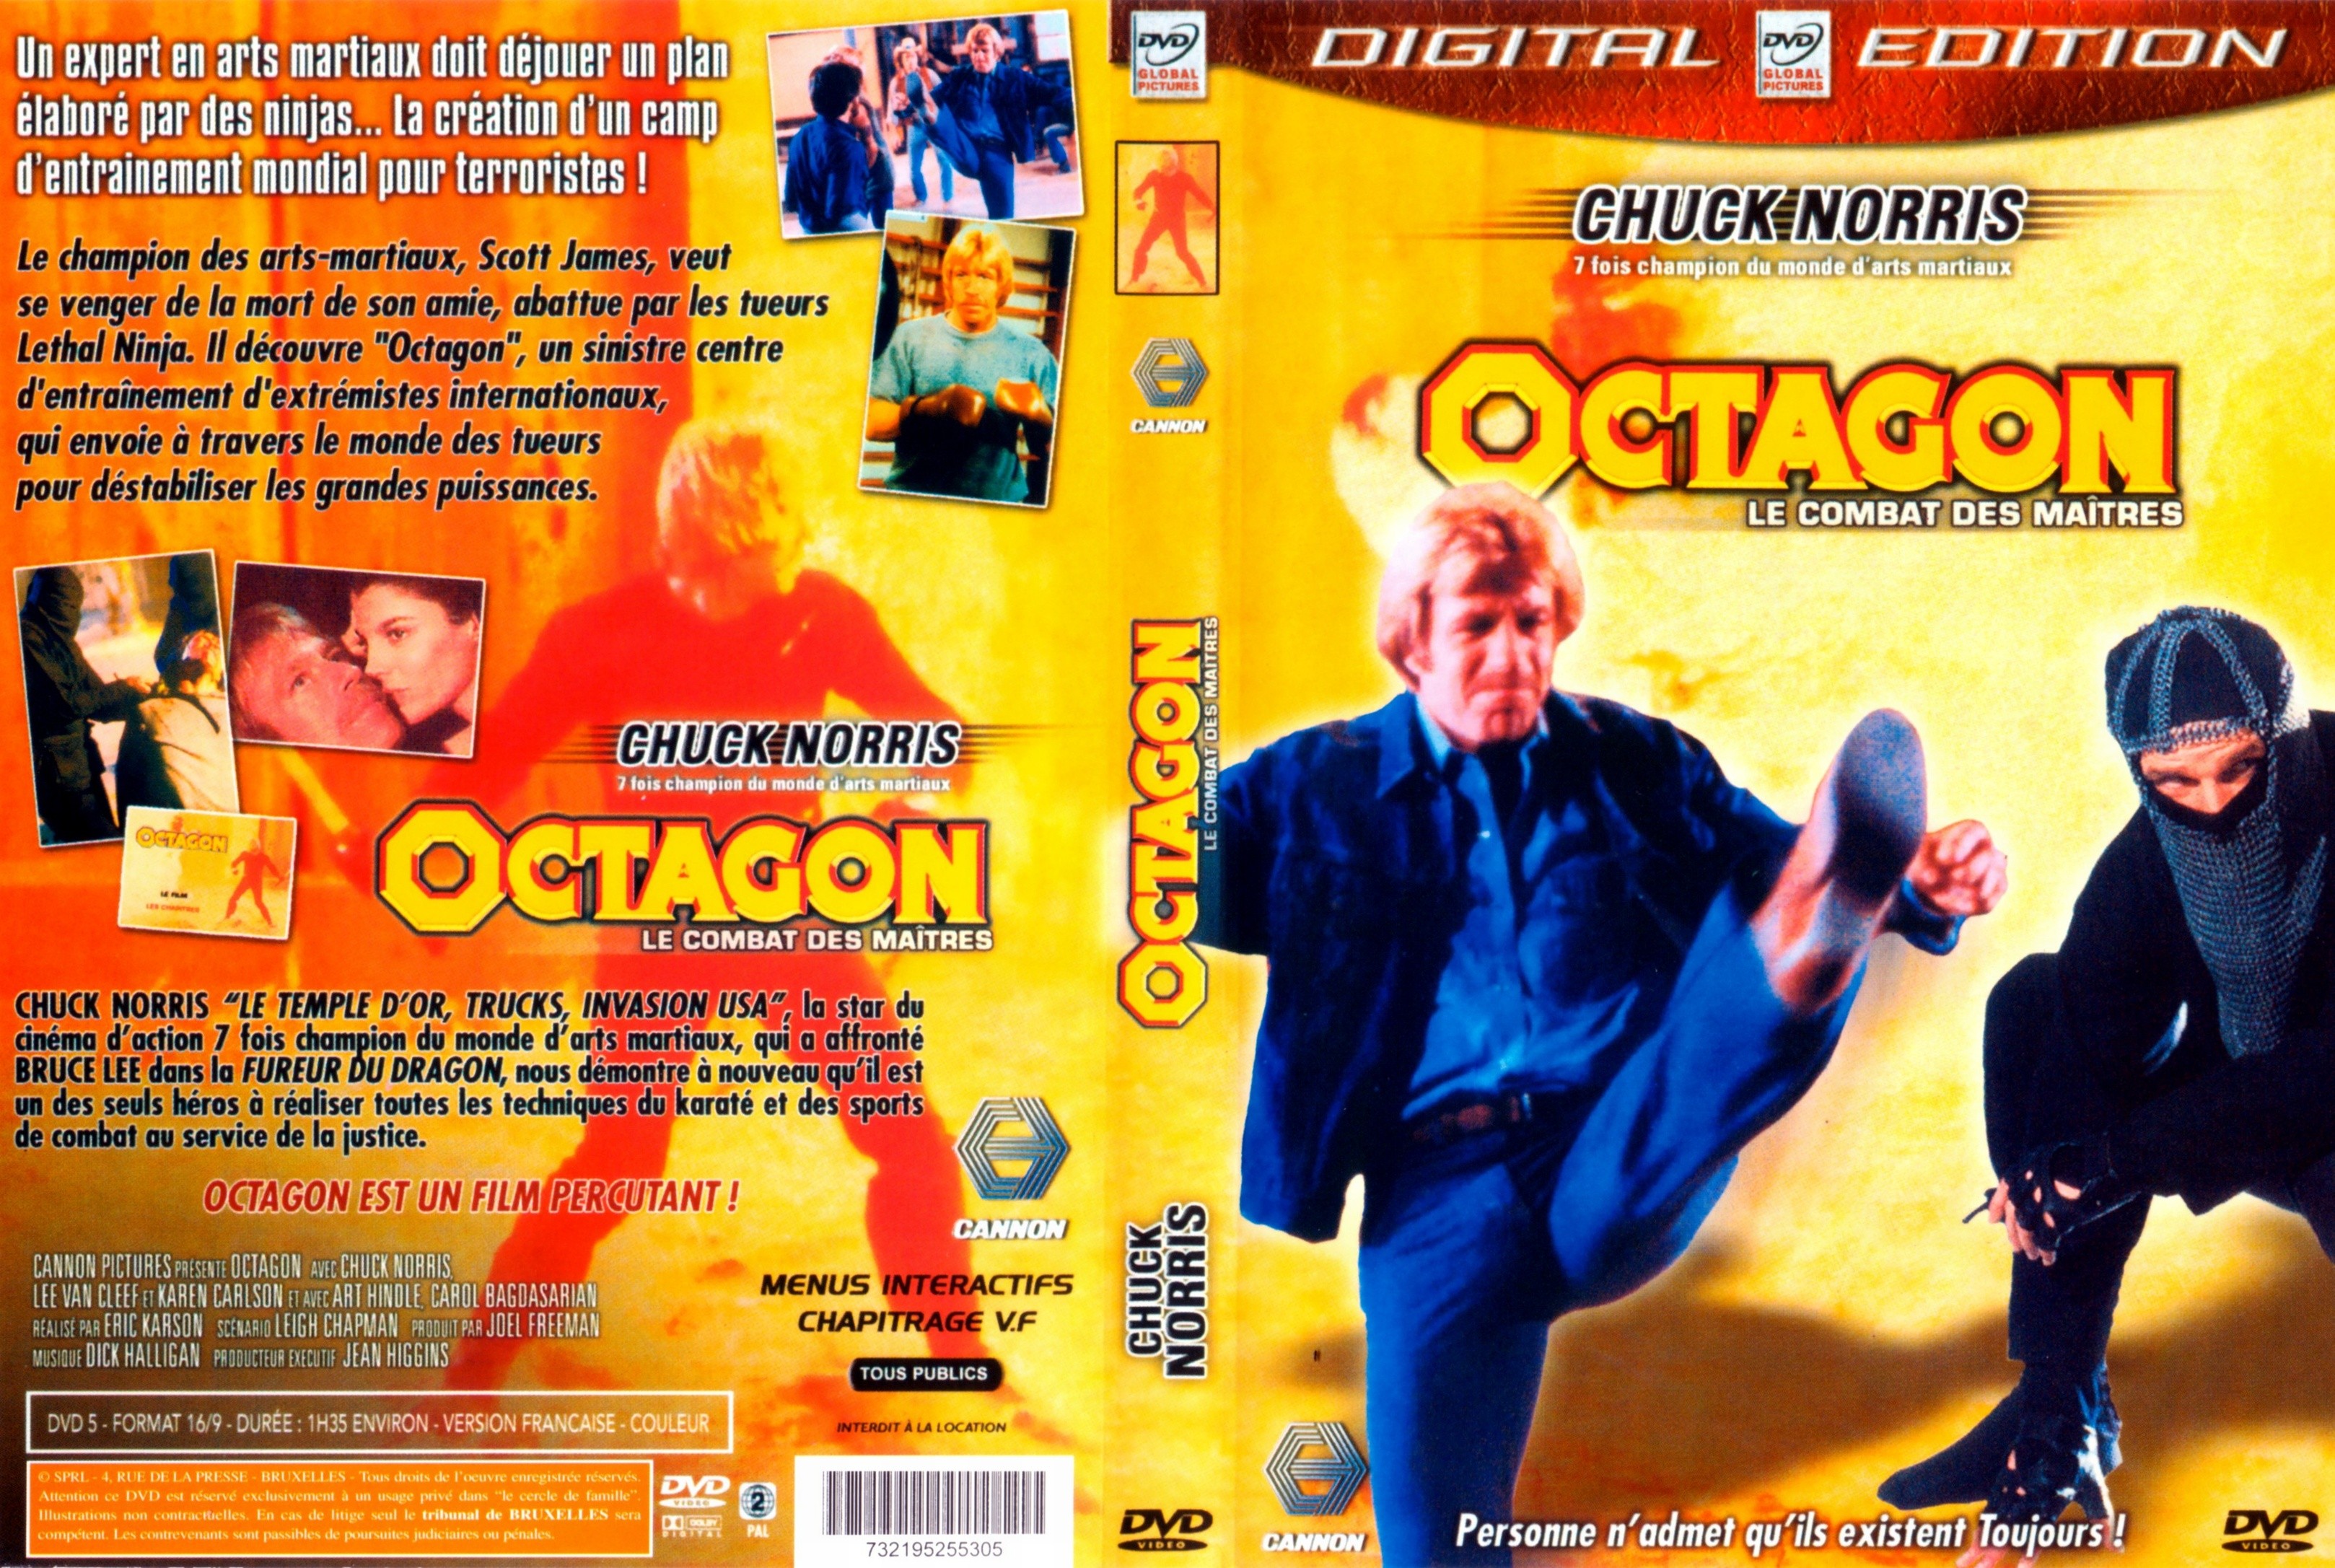 Jaquette DVD Octagon